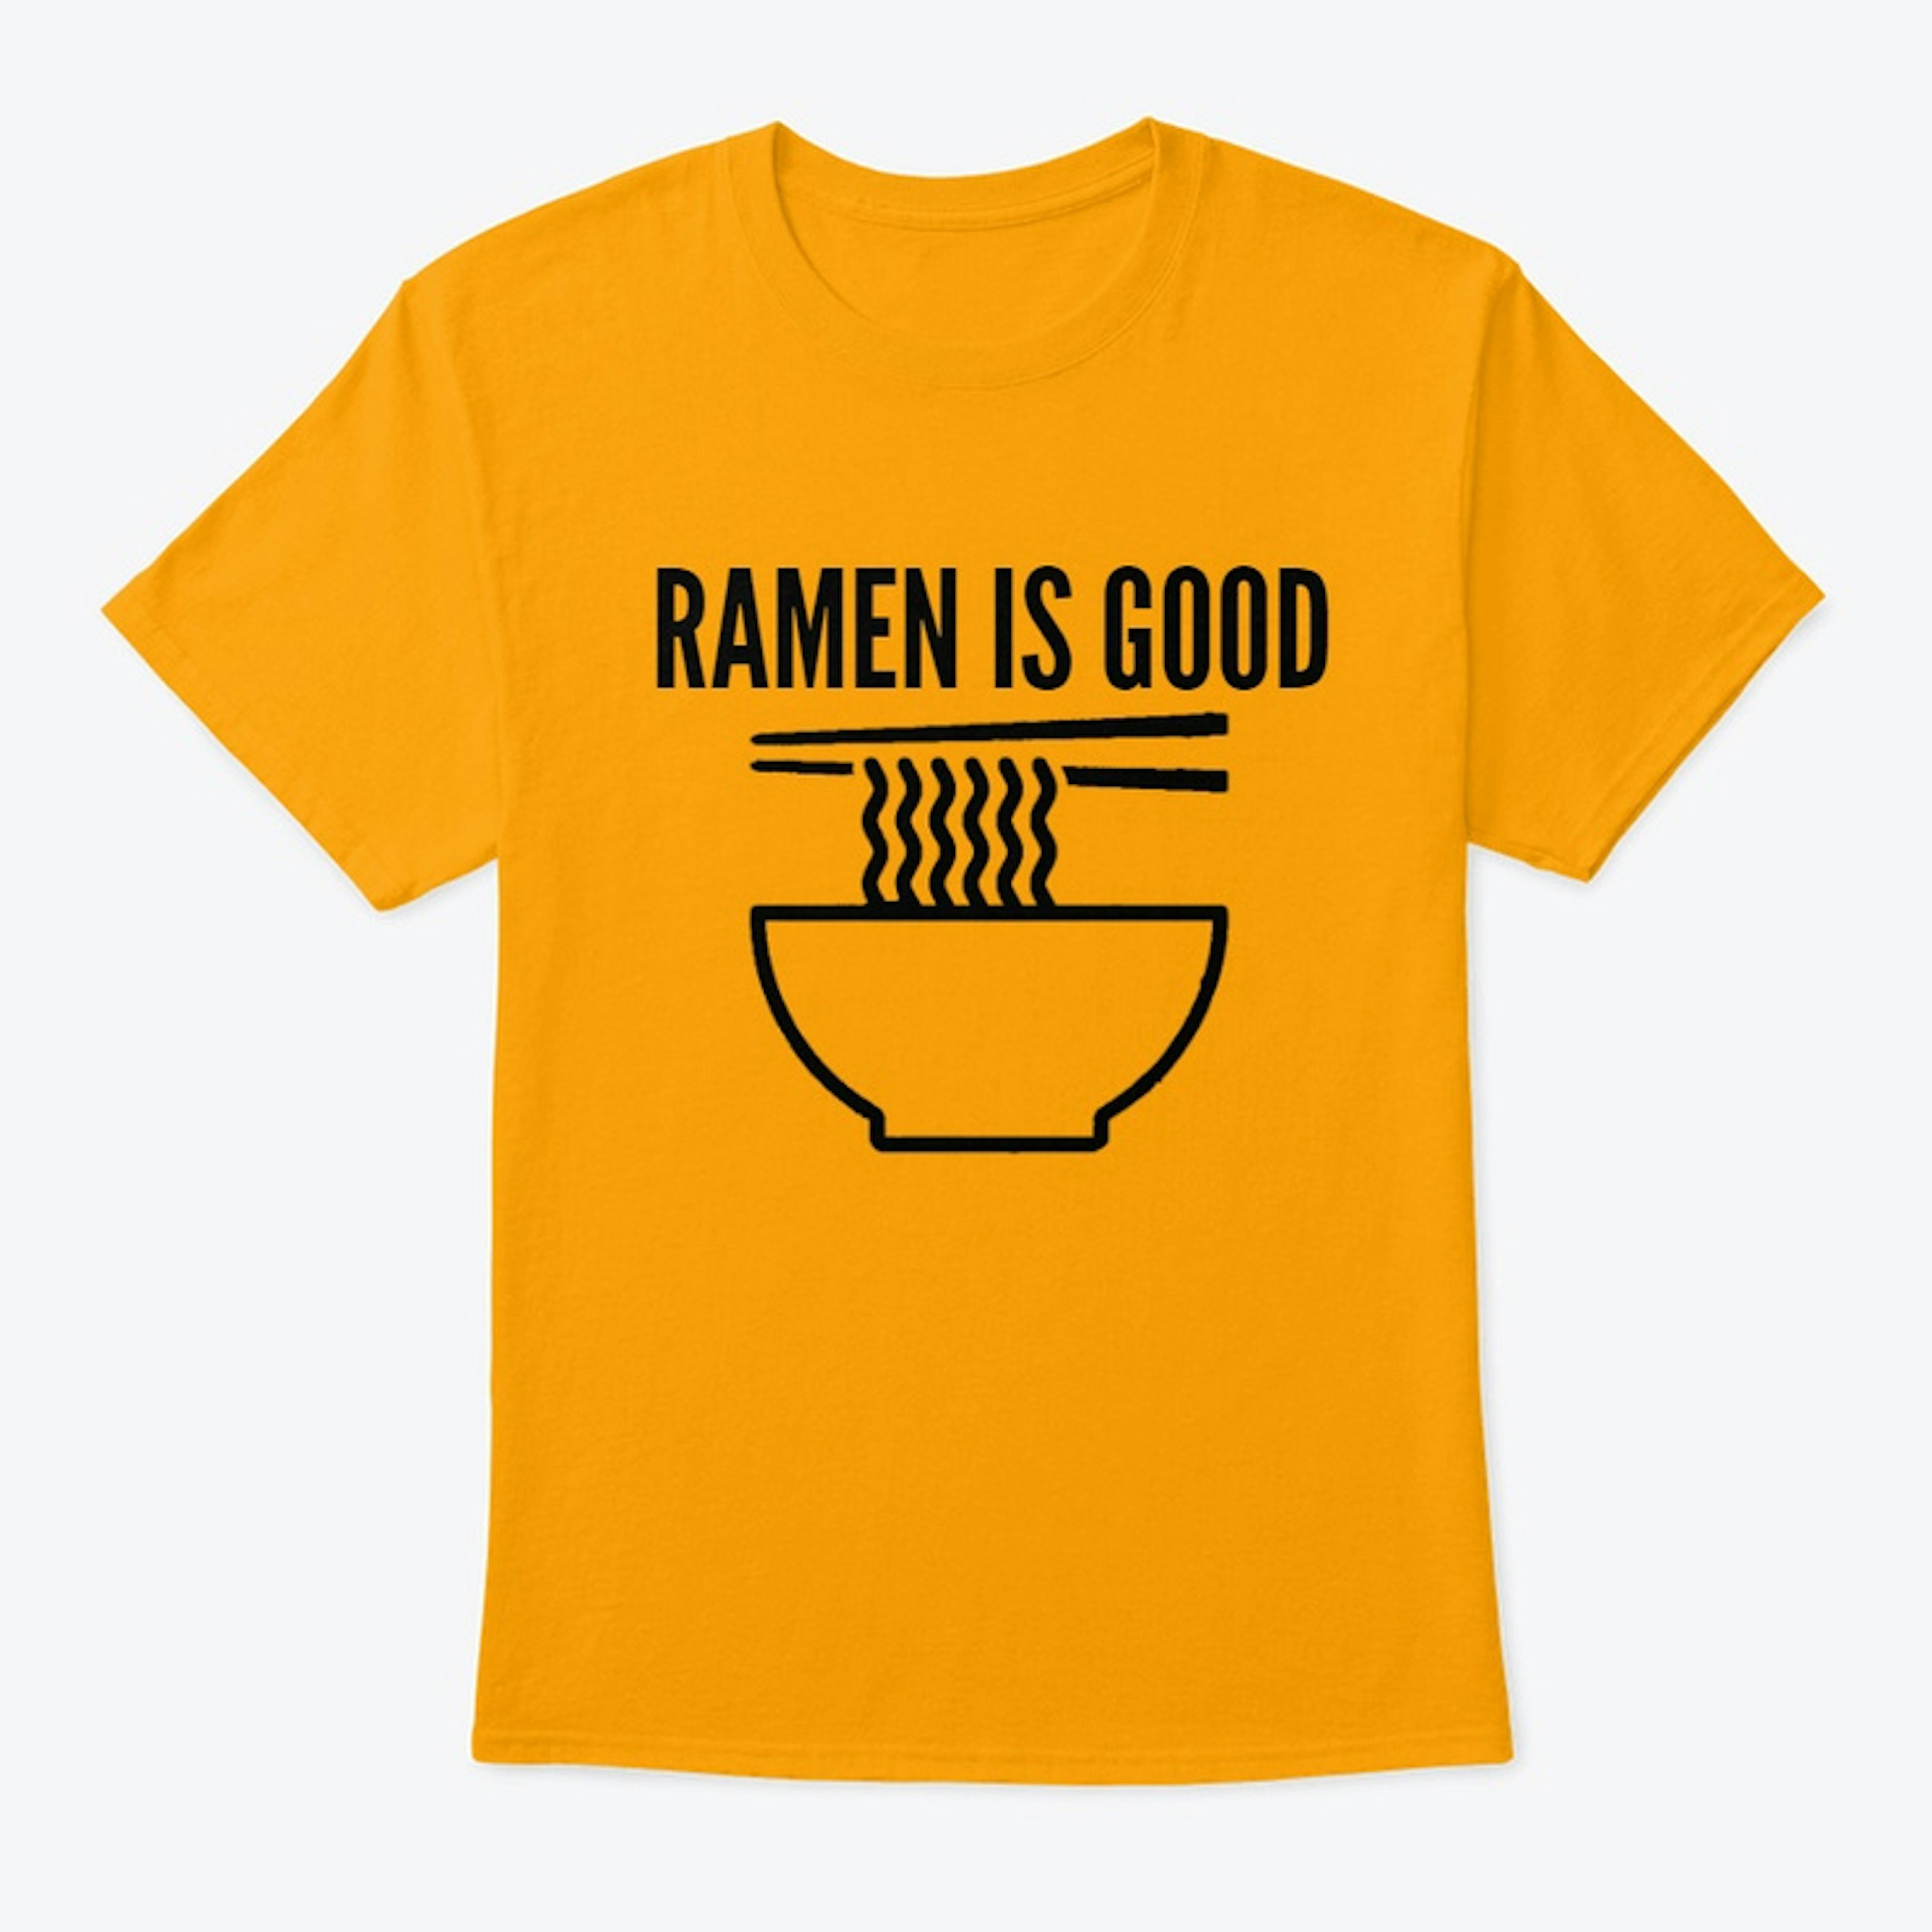 Ramen is GOOD